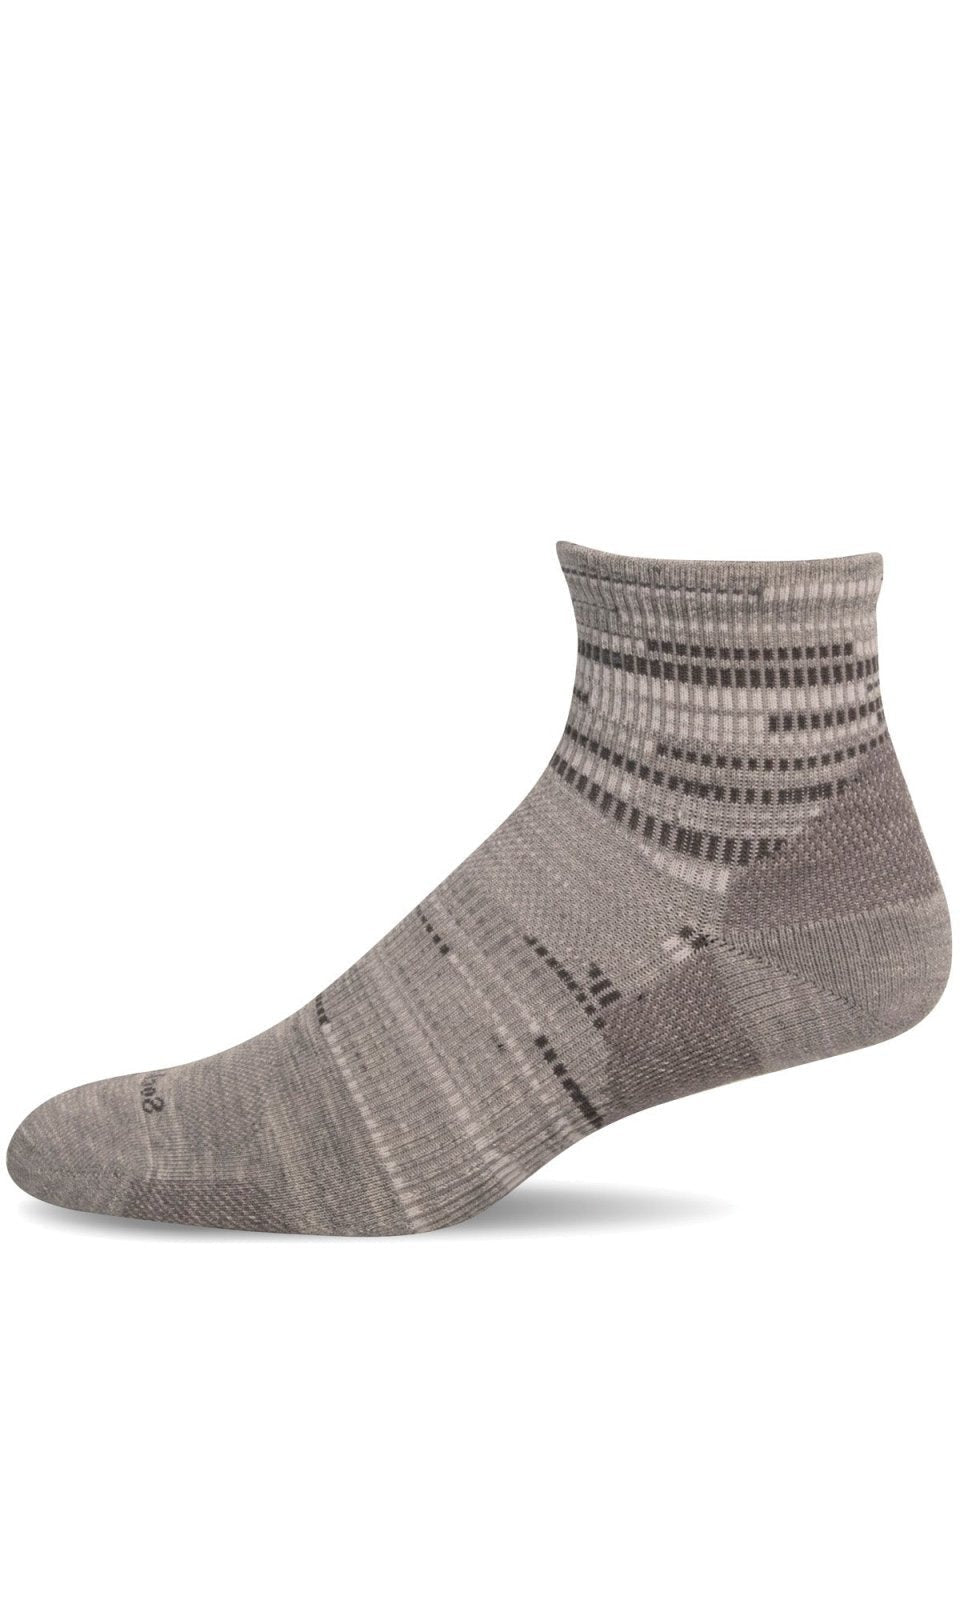 Sprint Quarter | Men | Compression | Light Gray - Socks - Sockwell